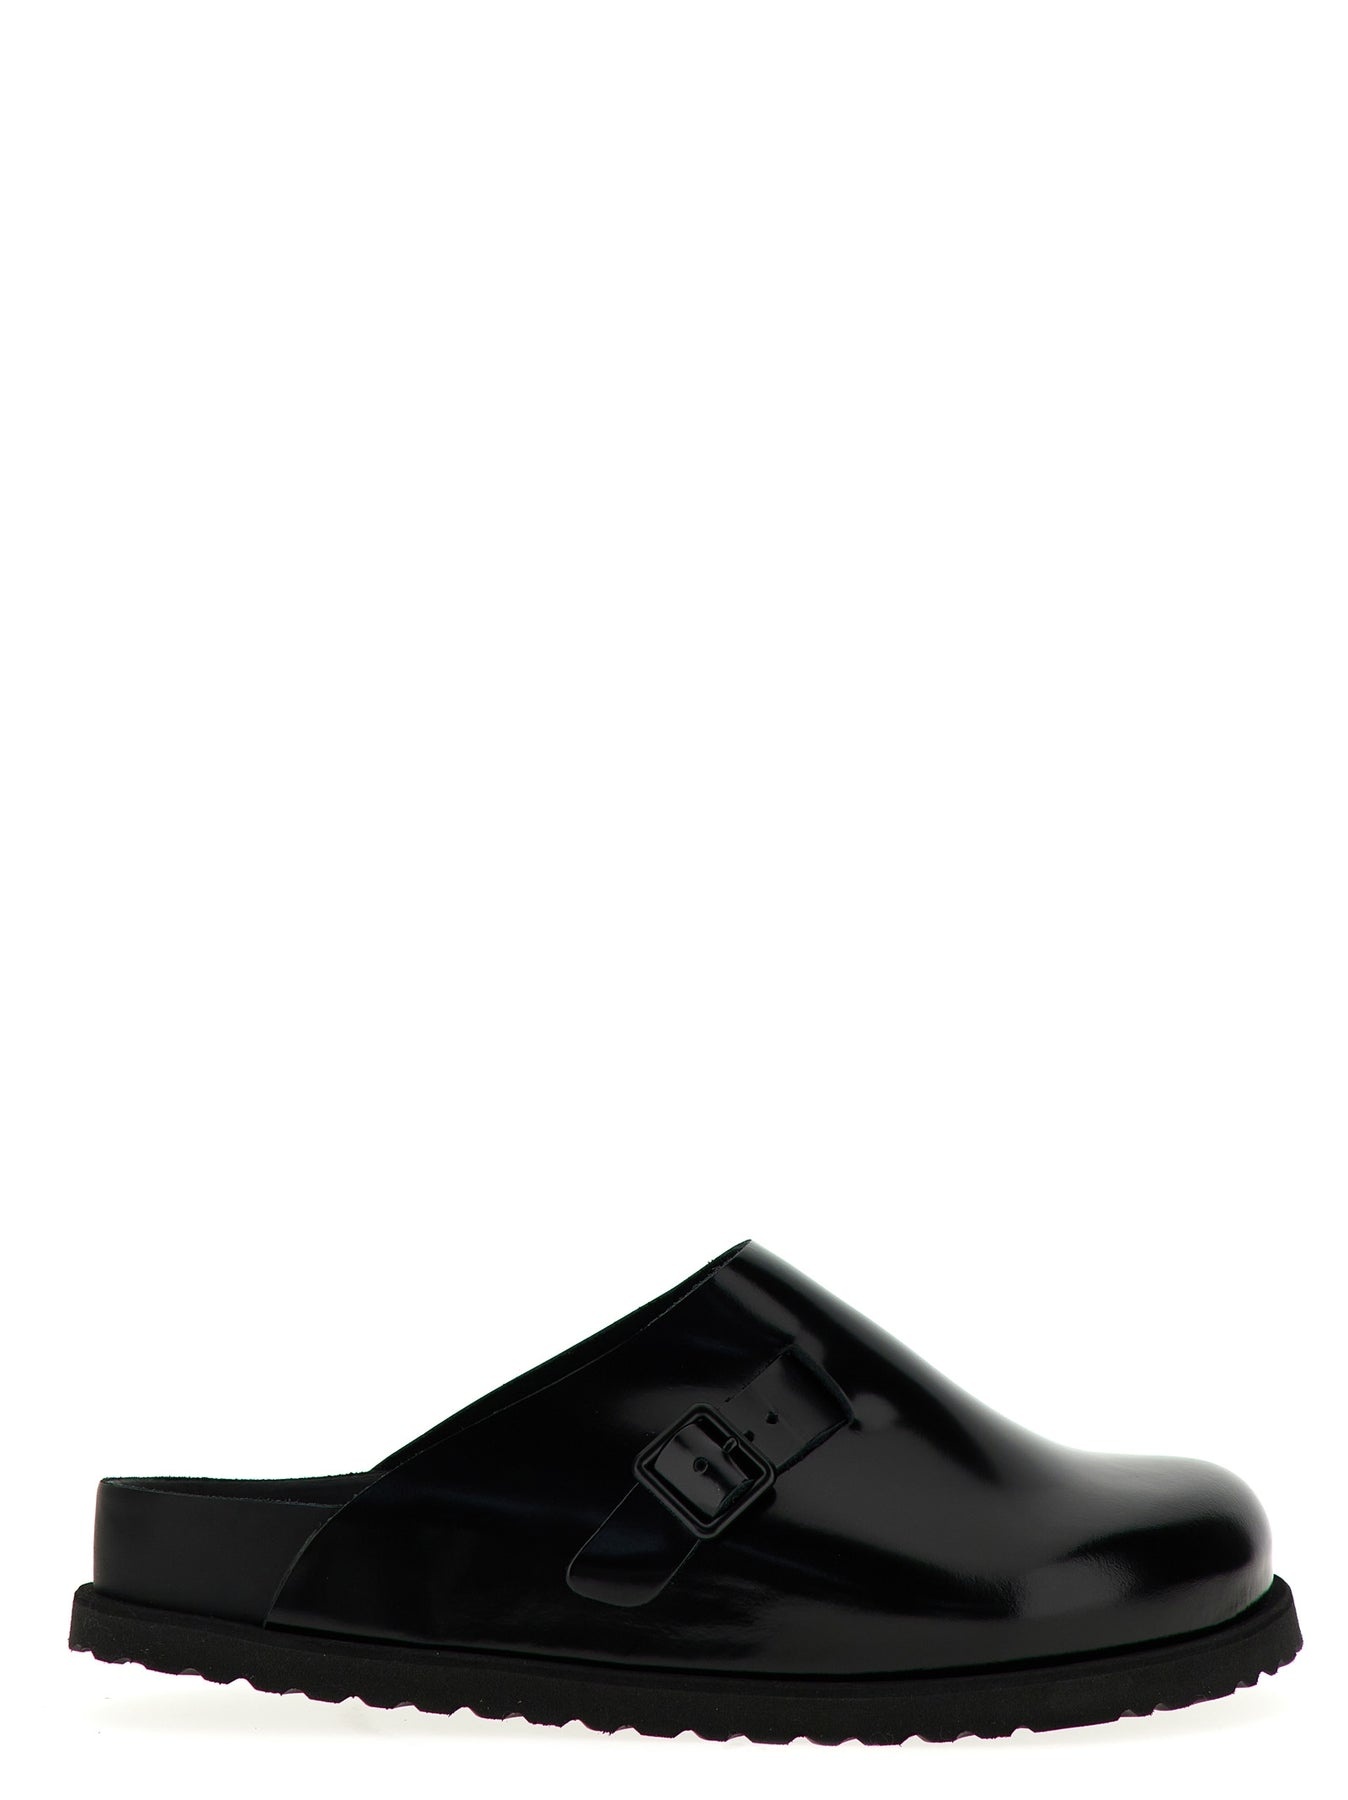 33 Dougal Flat Shoes Black - 1